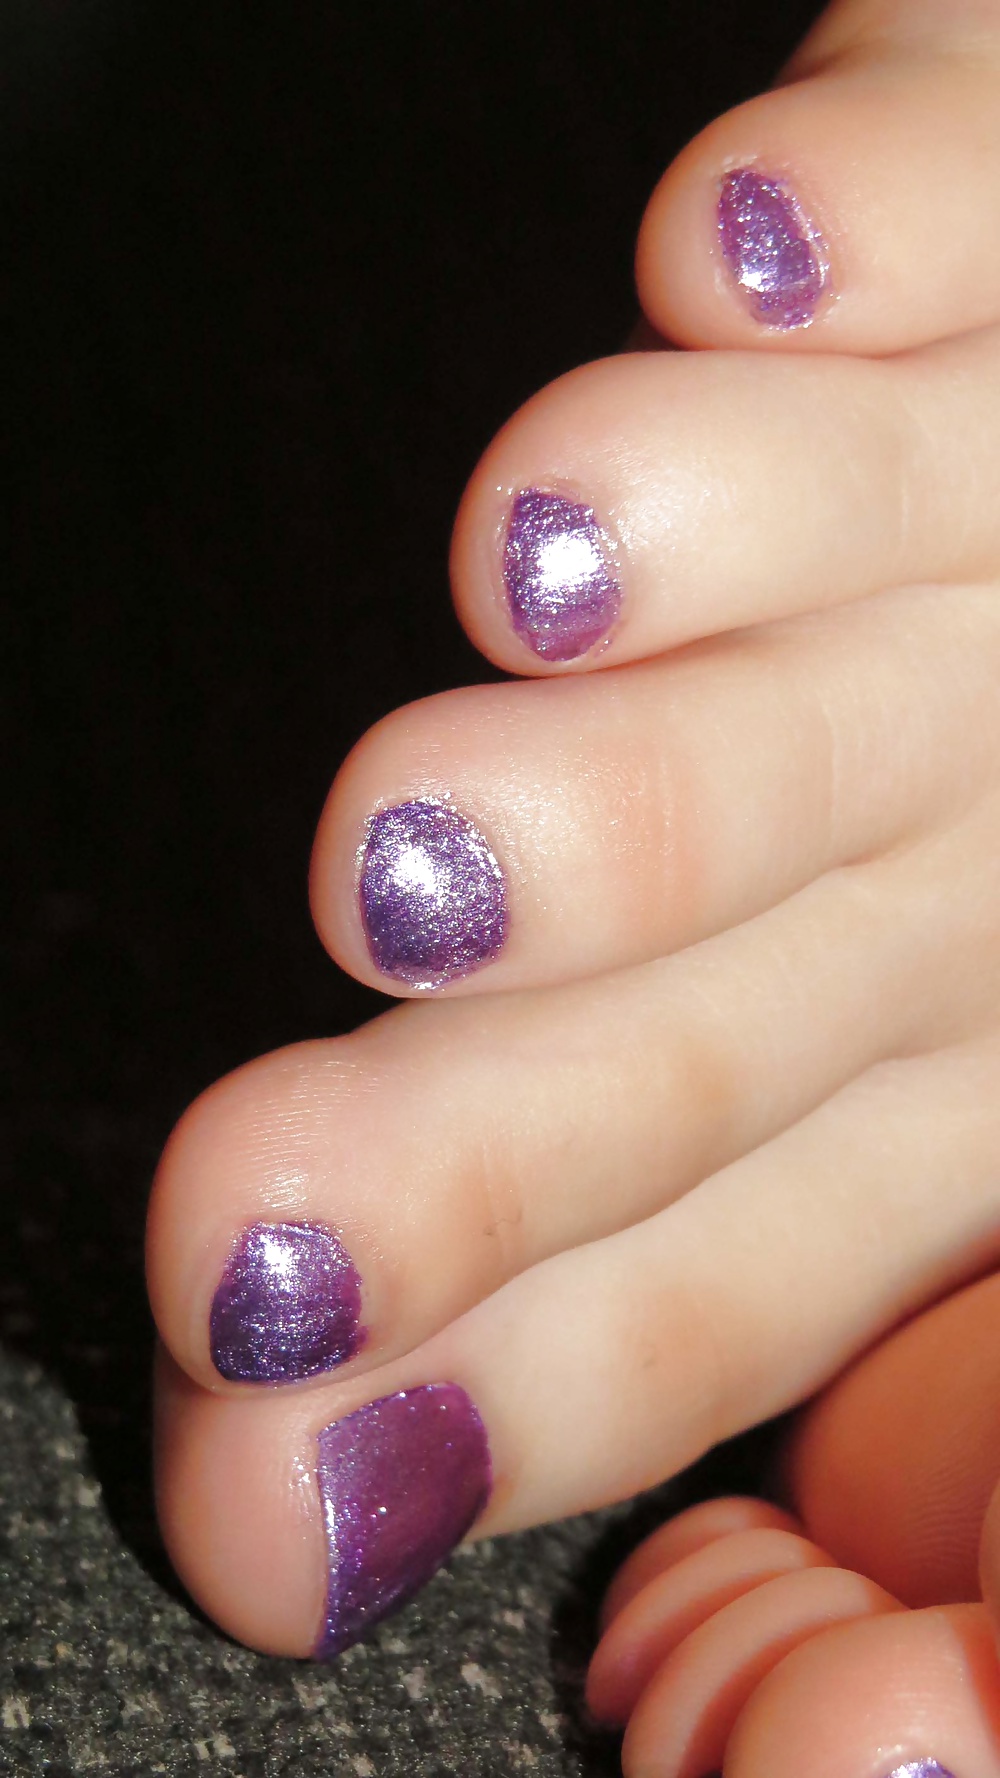 Free barefeet and purple nails photos